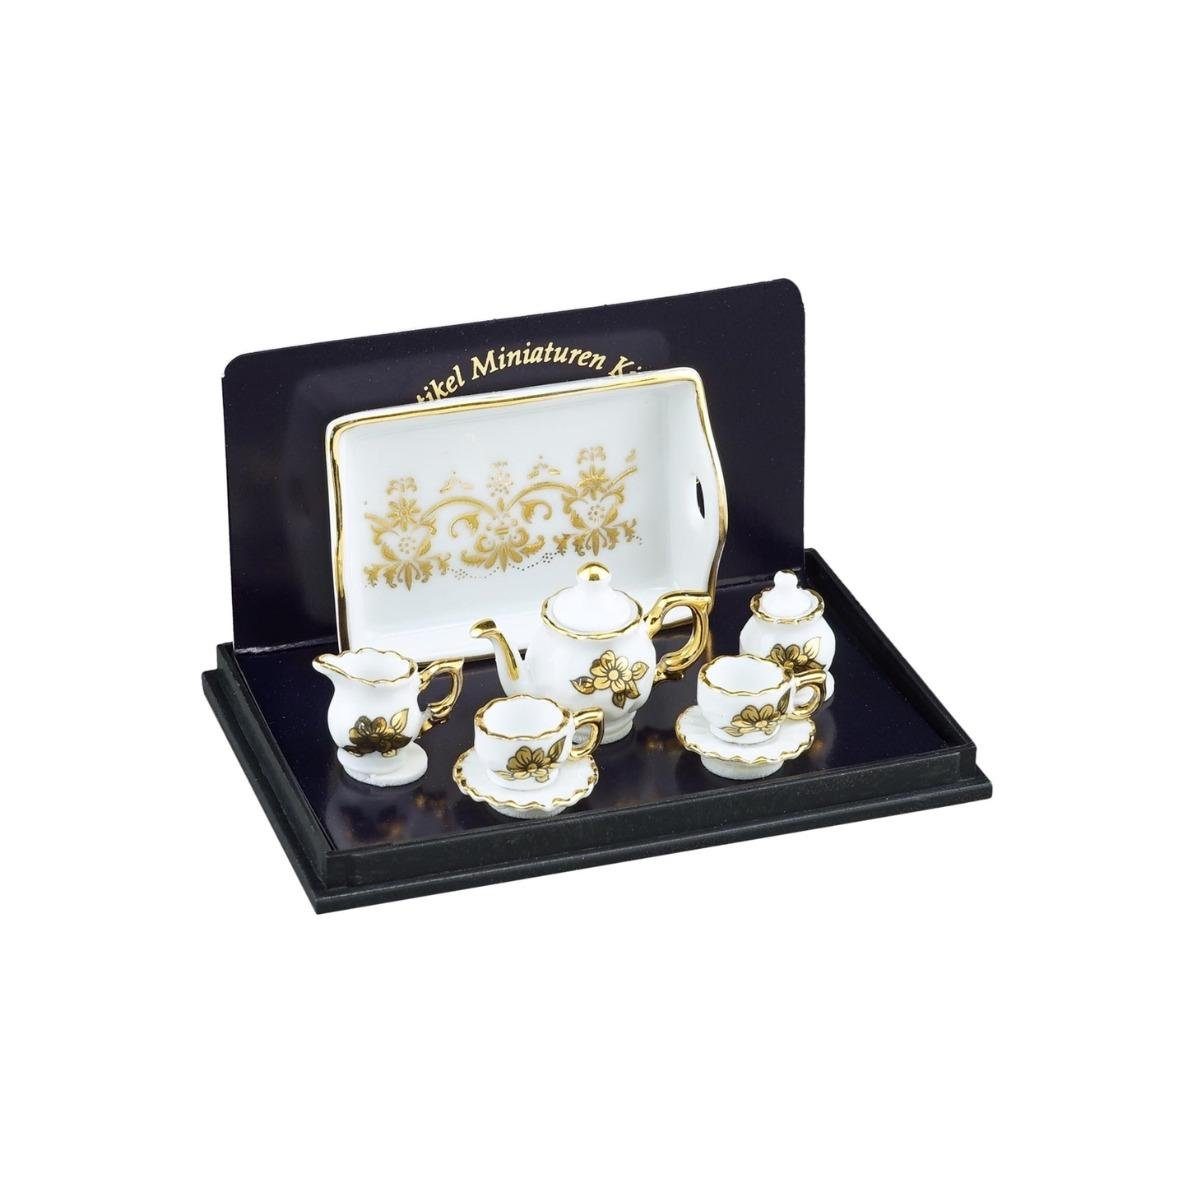 "Goldblume", Baronesse Teeset - Dekofigur 001.347/6 Porzellan Reutter Miniatur